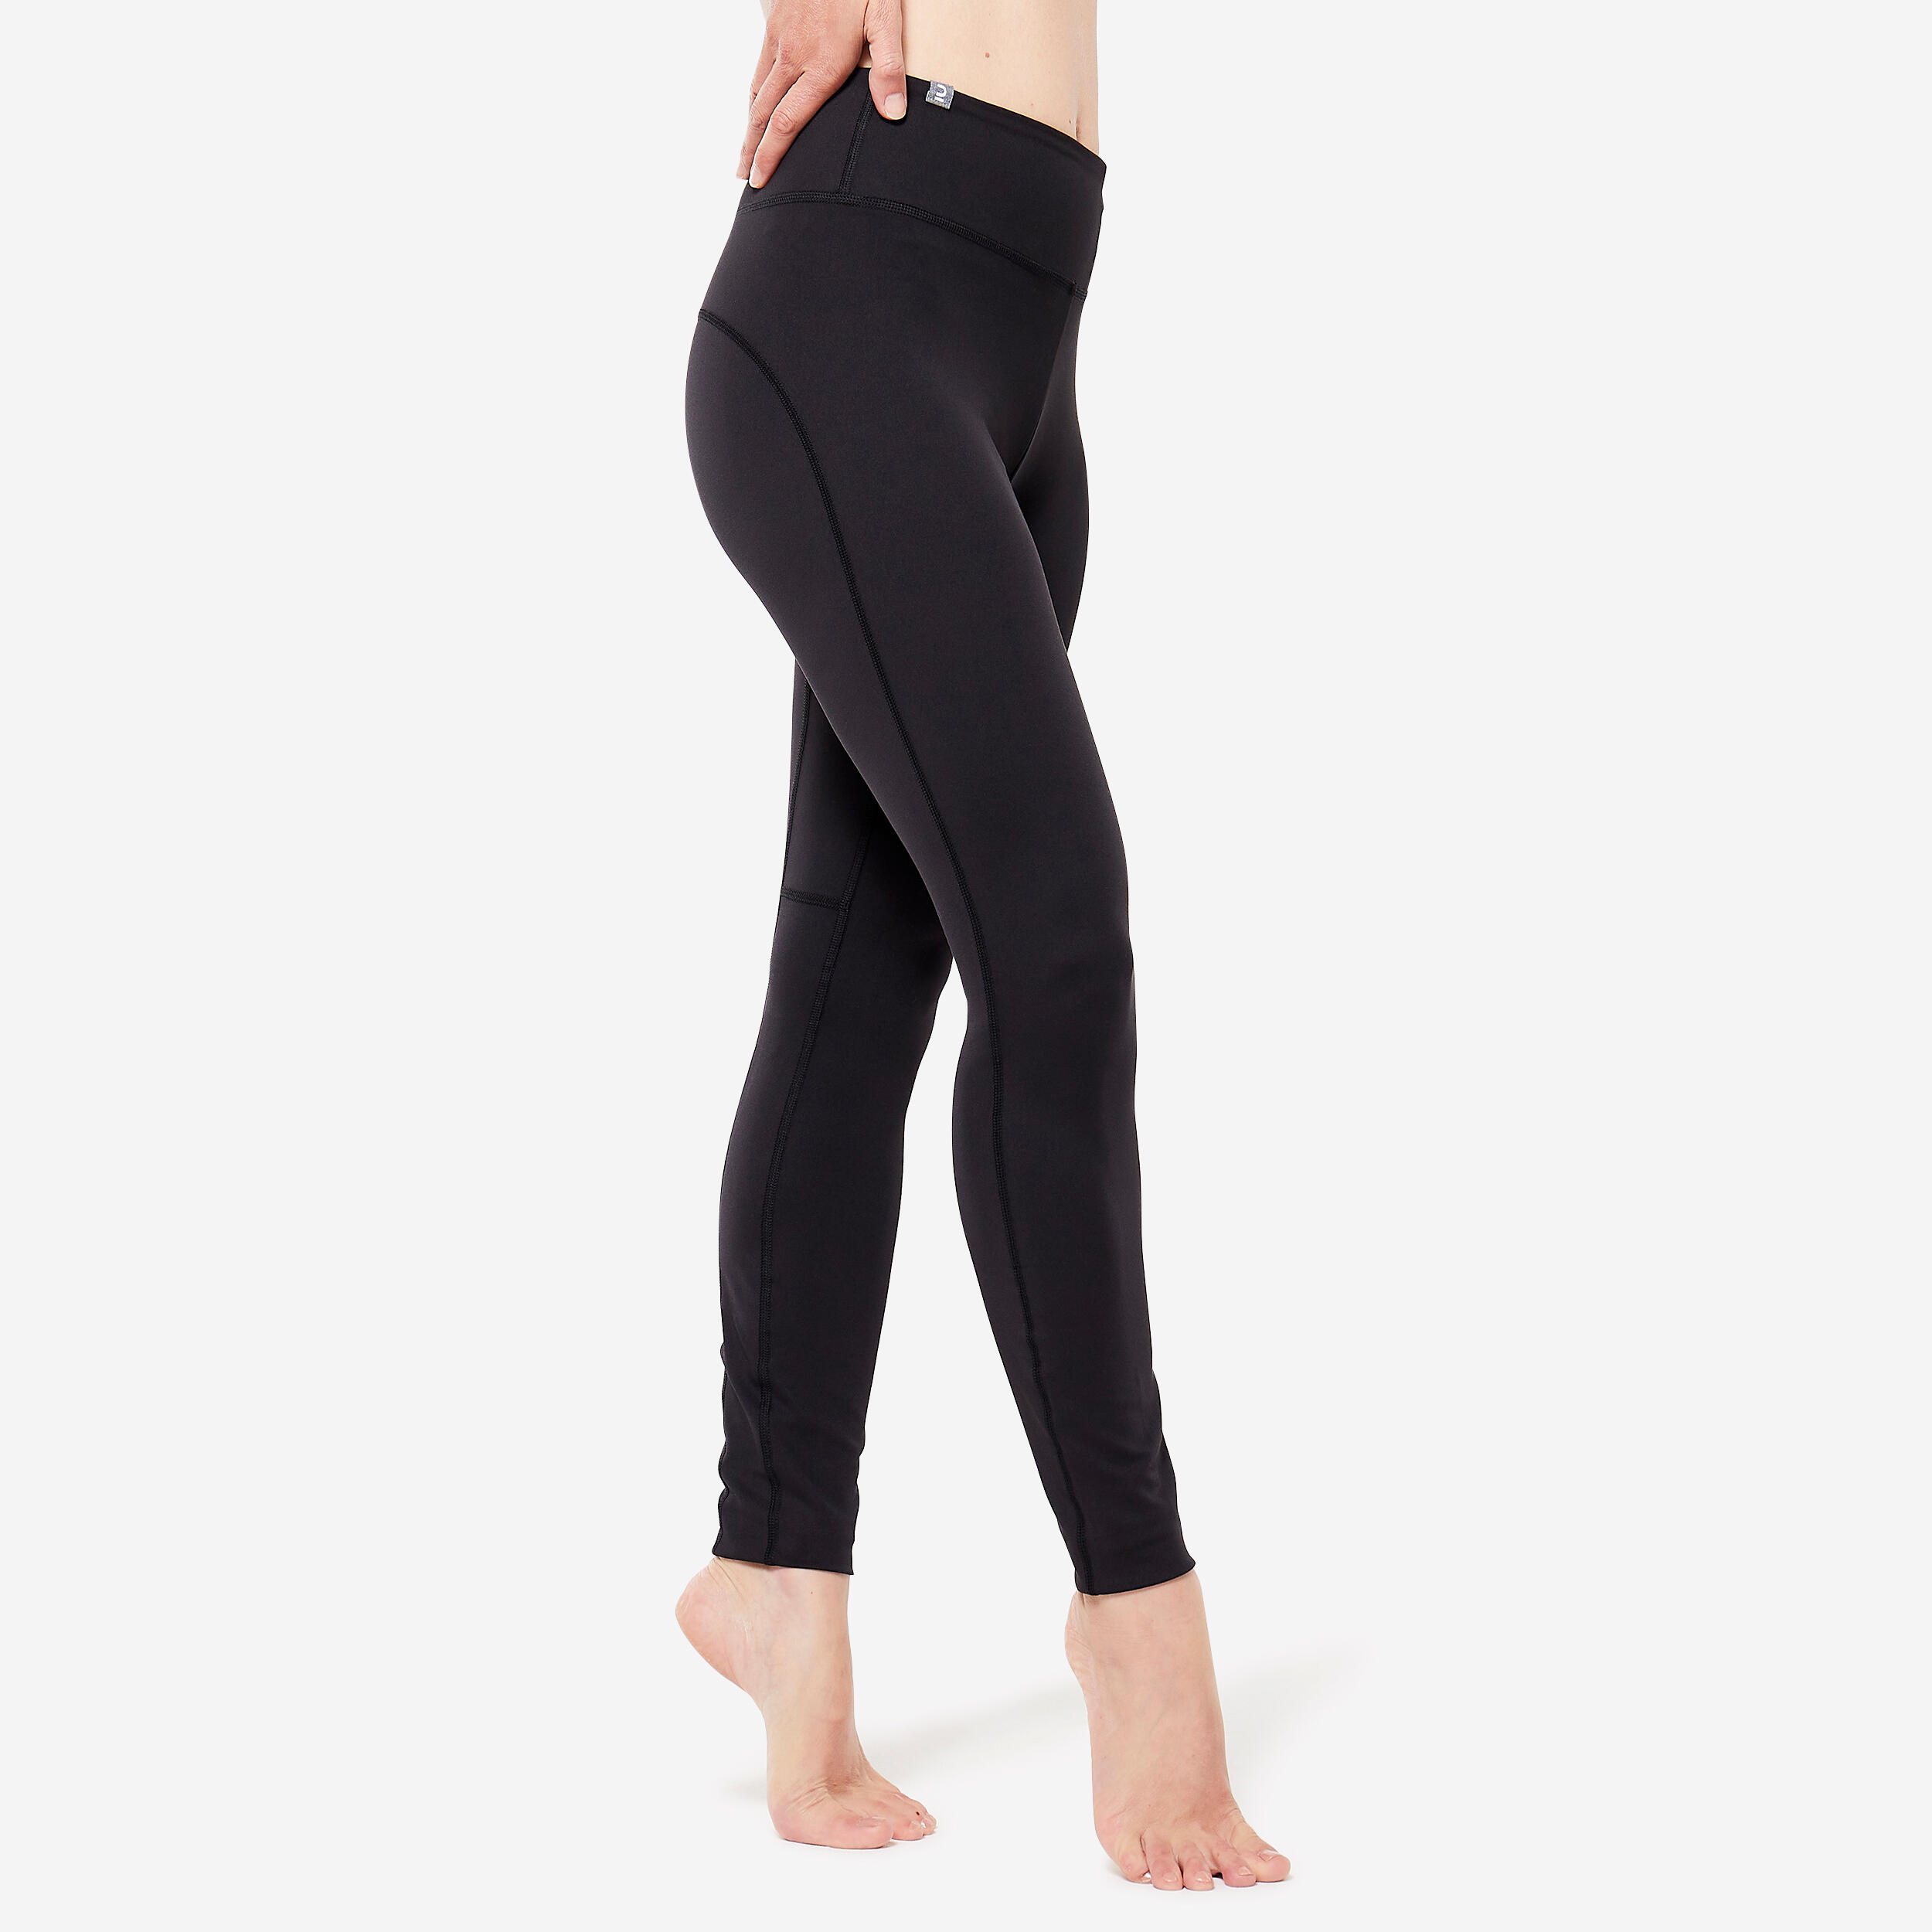 HAPIMO Yoga Legging Pants for Women High Rise Solid Side Hollowed